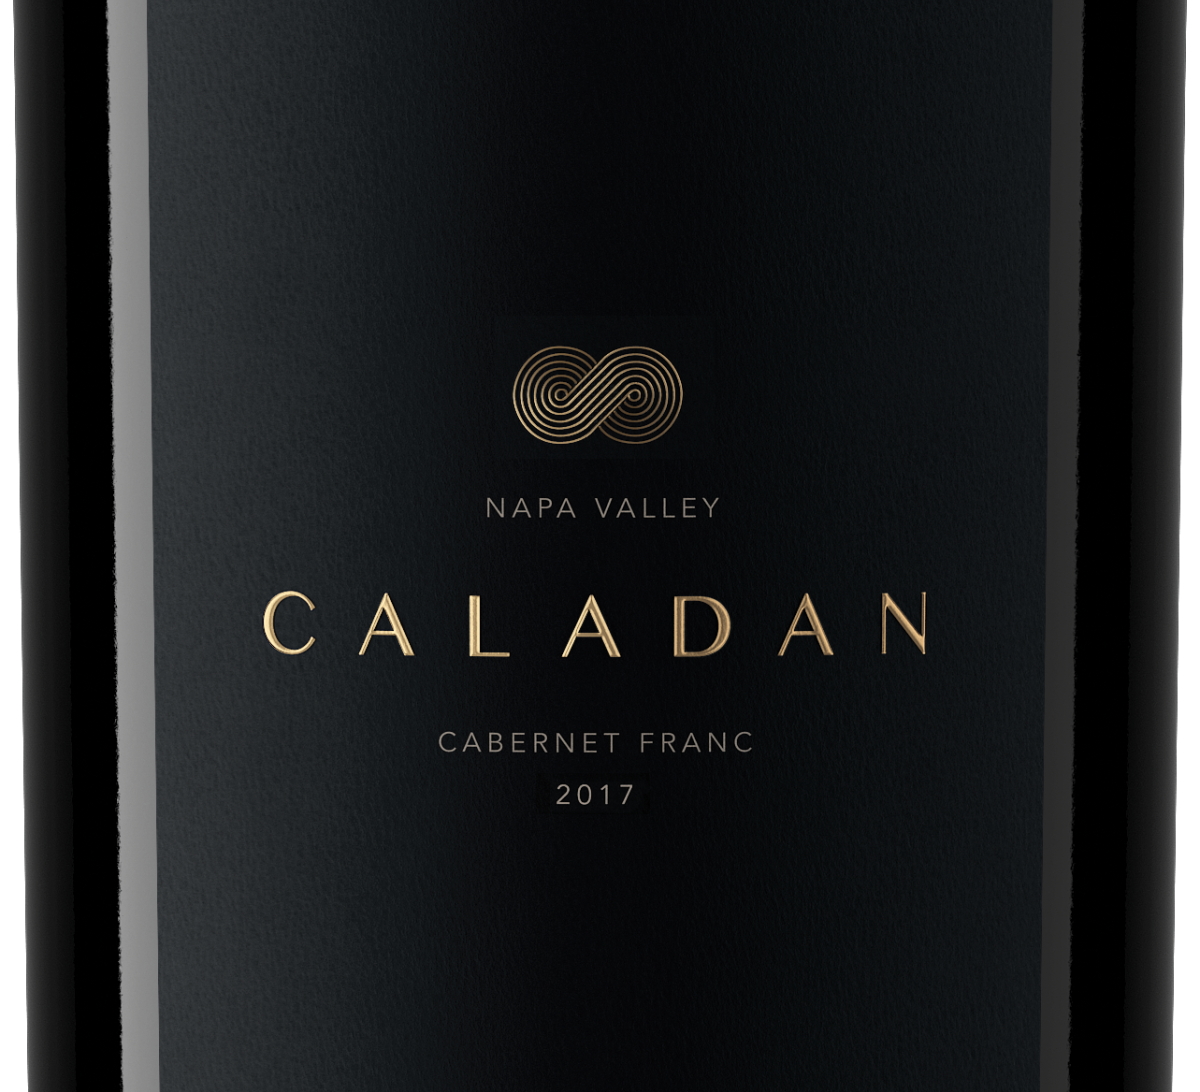 Caladan 2017 Cabernet Franc wine bottle